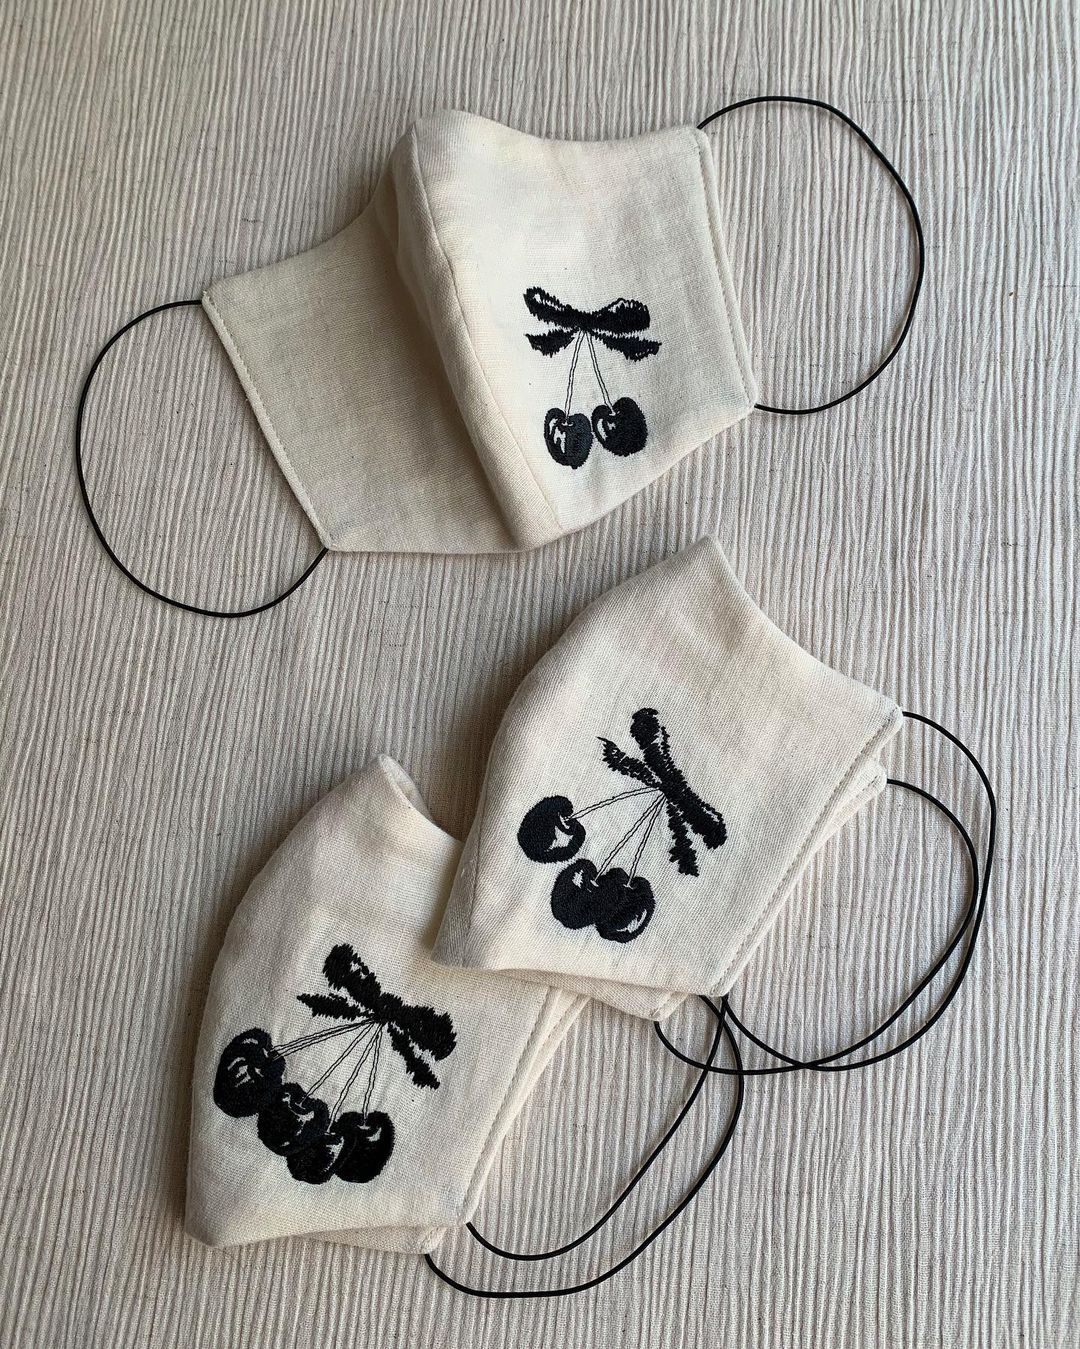 Cherry-embroidered masks that Tanaka made (from Daisuke Tanaka’s Instagram)